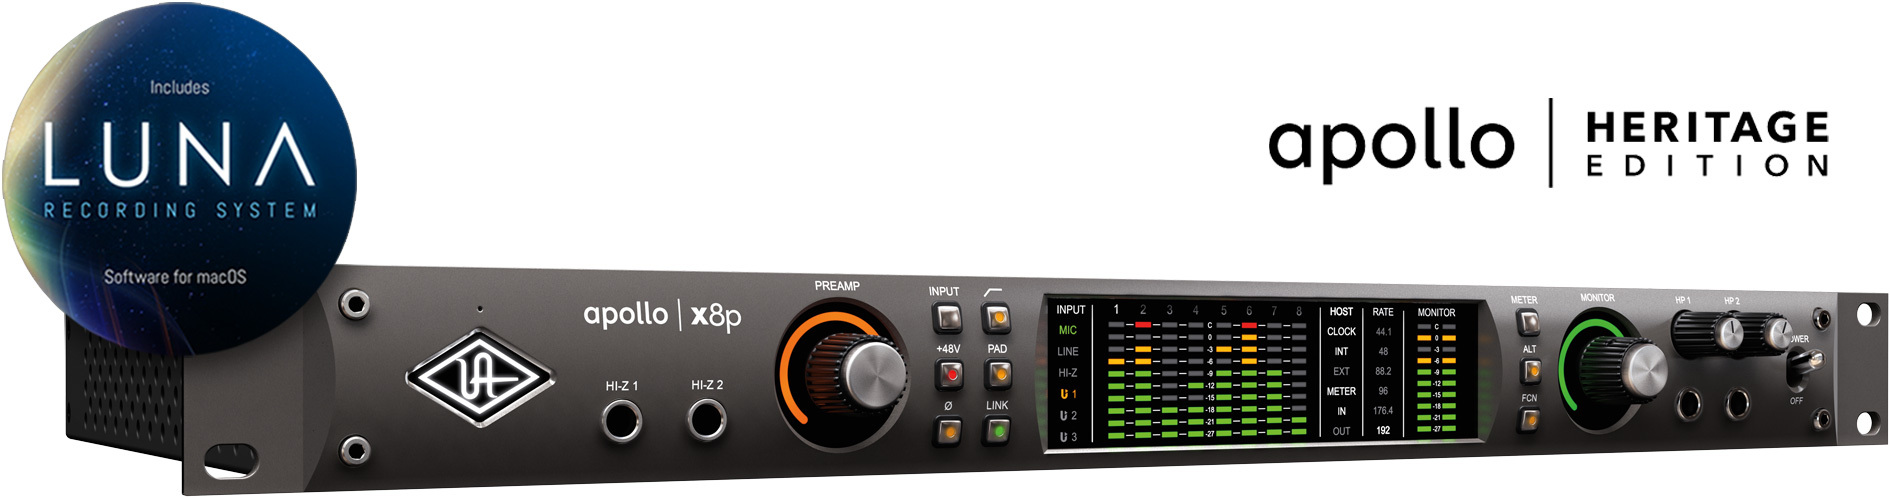 Universal Audio Apollo X8p Heritage Edition - Thunderbolt audio-interface - Main picture